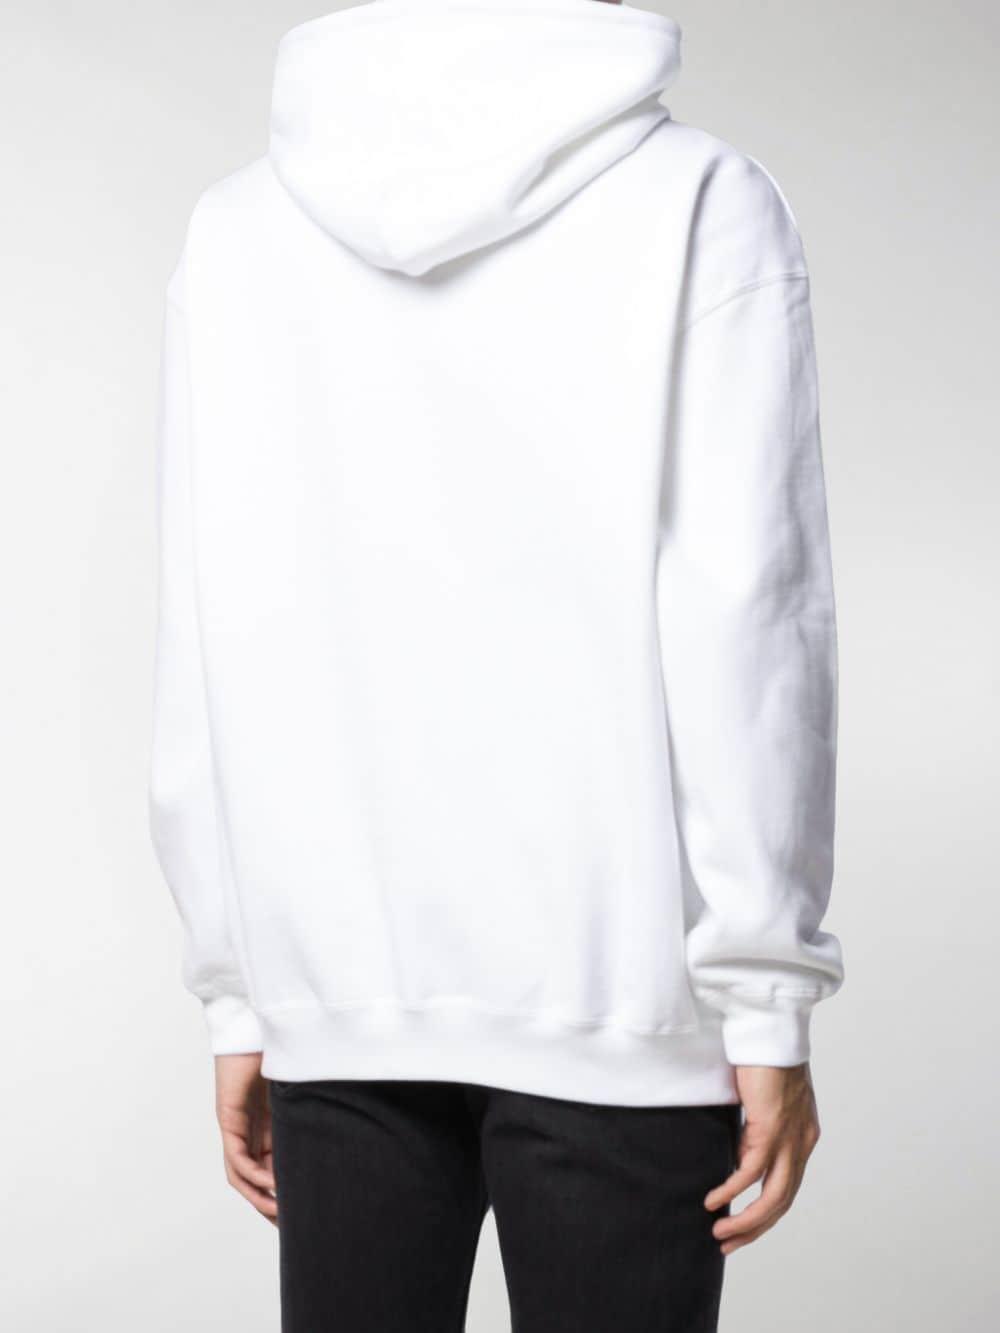 Balenciaga Cotton Logo Print Hoodie in White for Men - Lyst